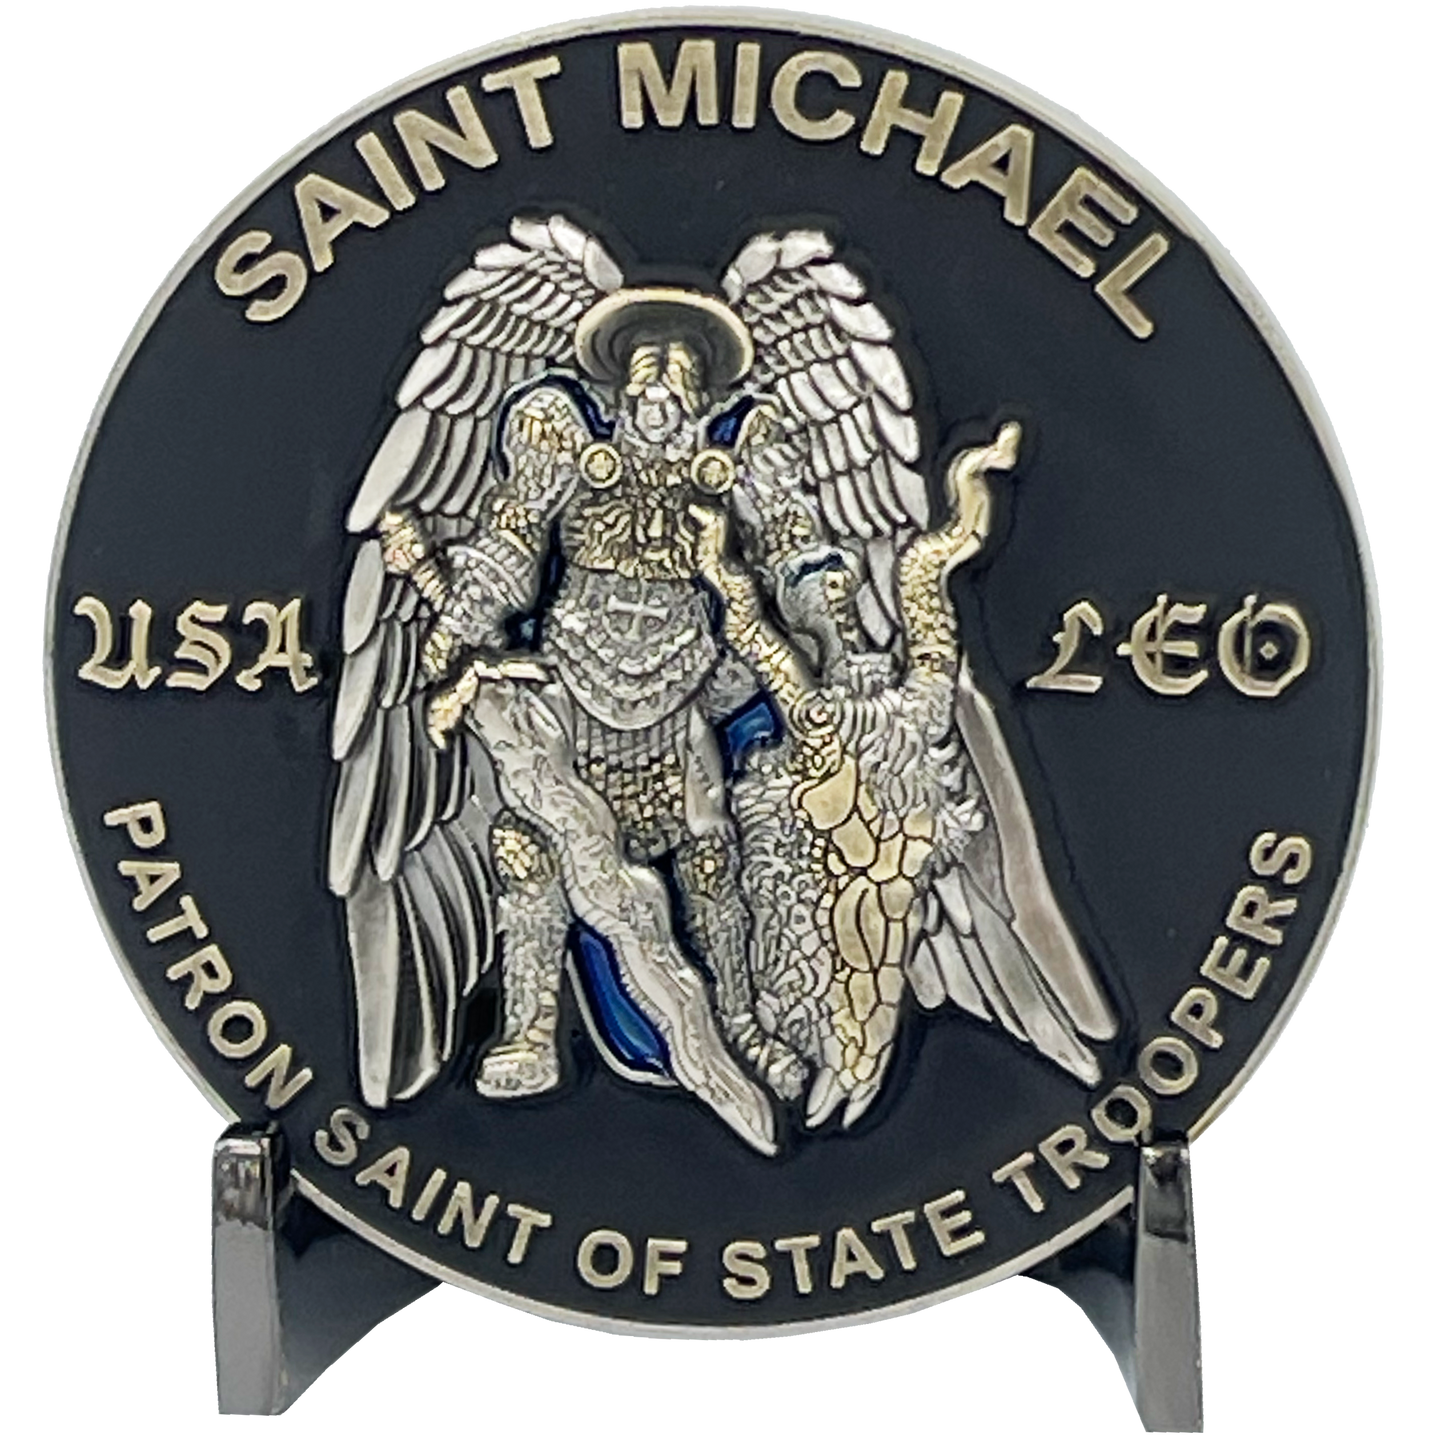 BL11-001 PSP Pennsylvania State Police Trooper Saint Michael Patron Saint Challenge Coin ST. MICHAEL